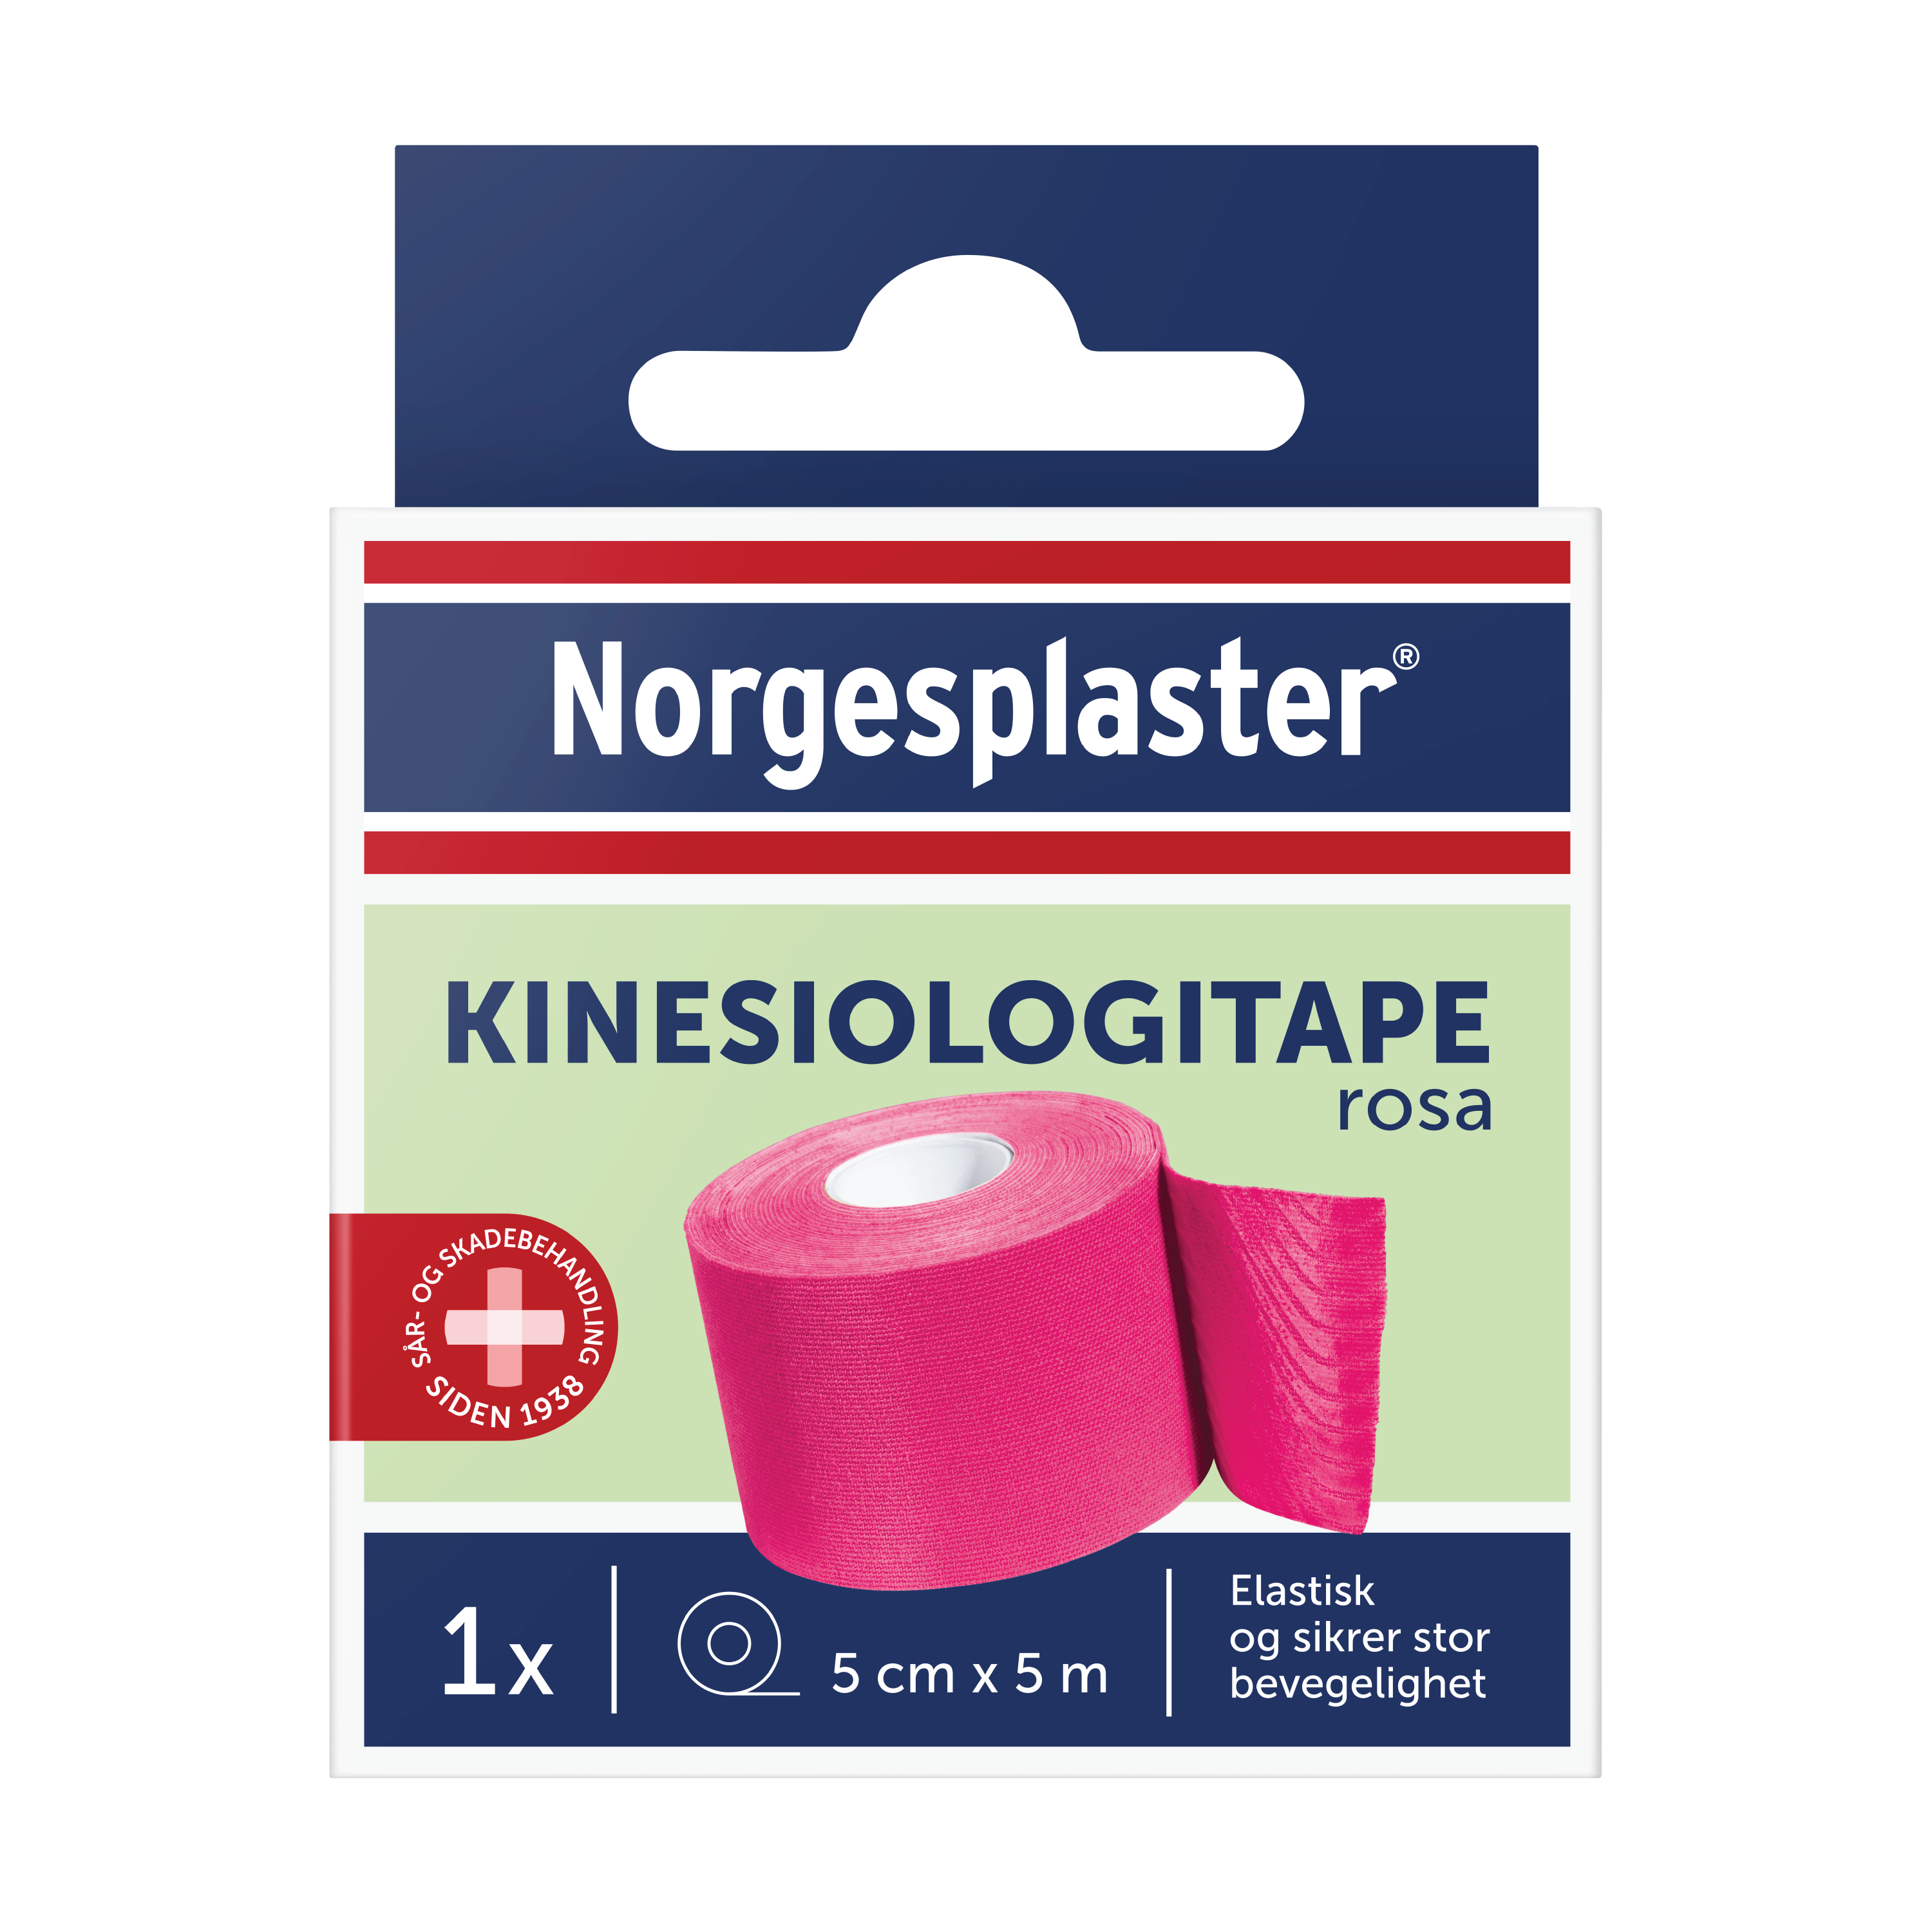 Norgesplaster Kinesiologitape 5cm x 5m, Rosa, 1 stk.